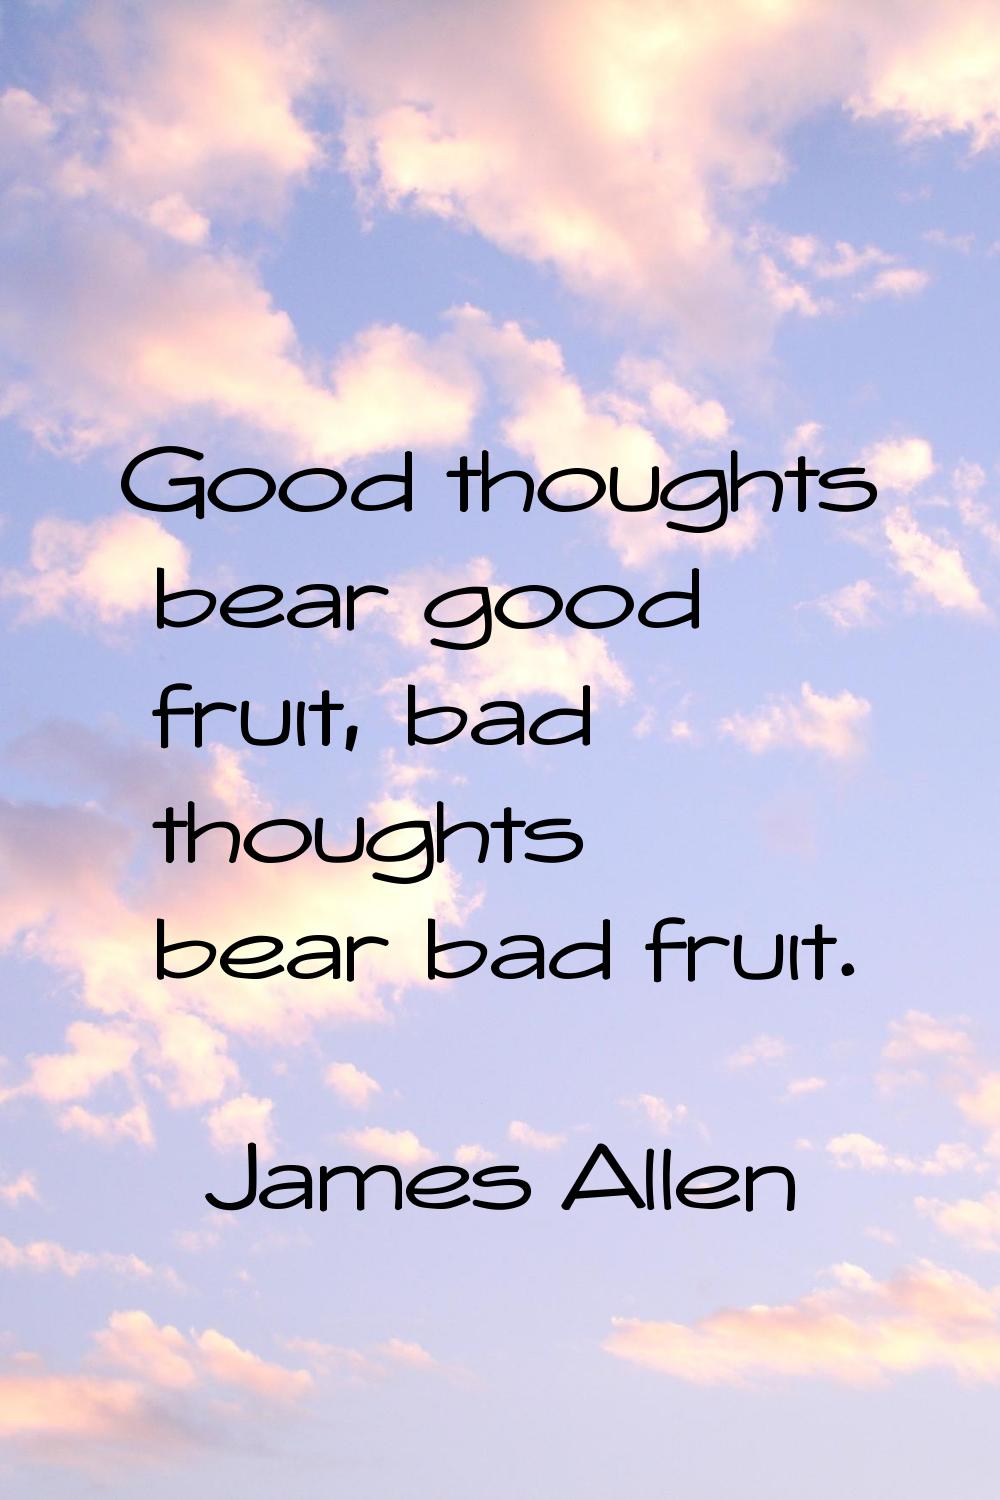 Good thoughts bear good fruit, bad thoughts bear bad fruit.